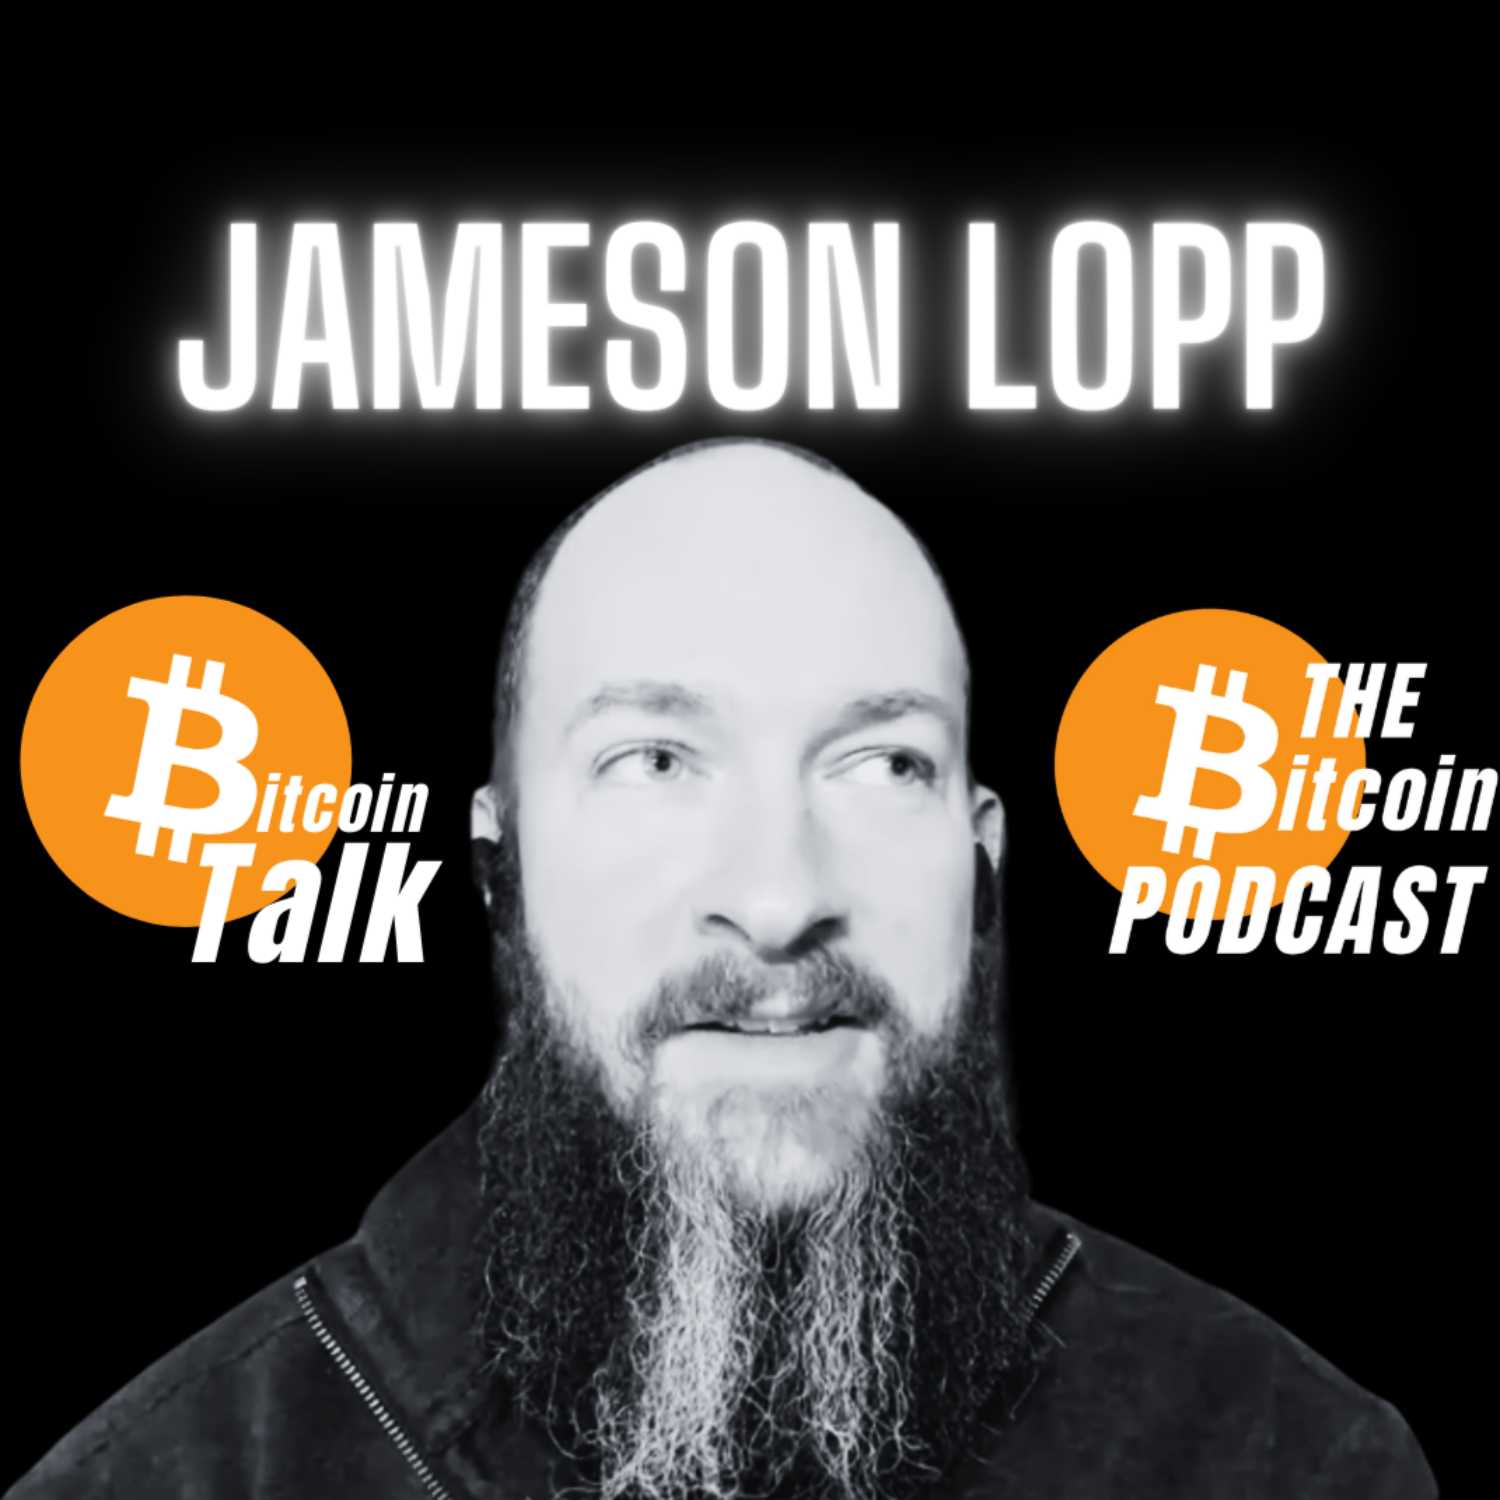 Jameson Lopp: Bitcoin, Nostr, Ossification, & Sovereignty (Bitcoin Talk)